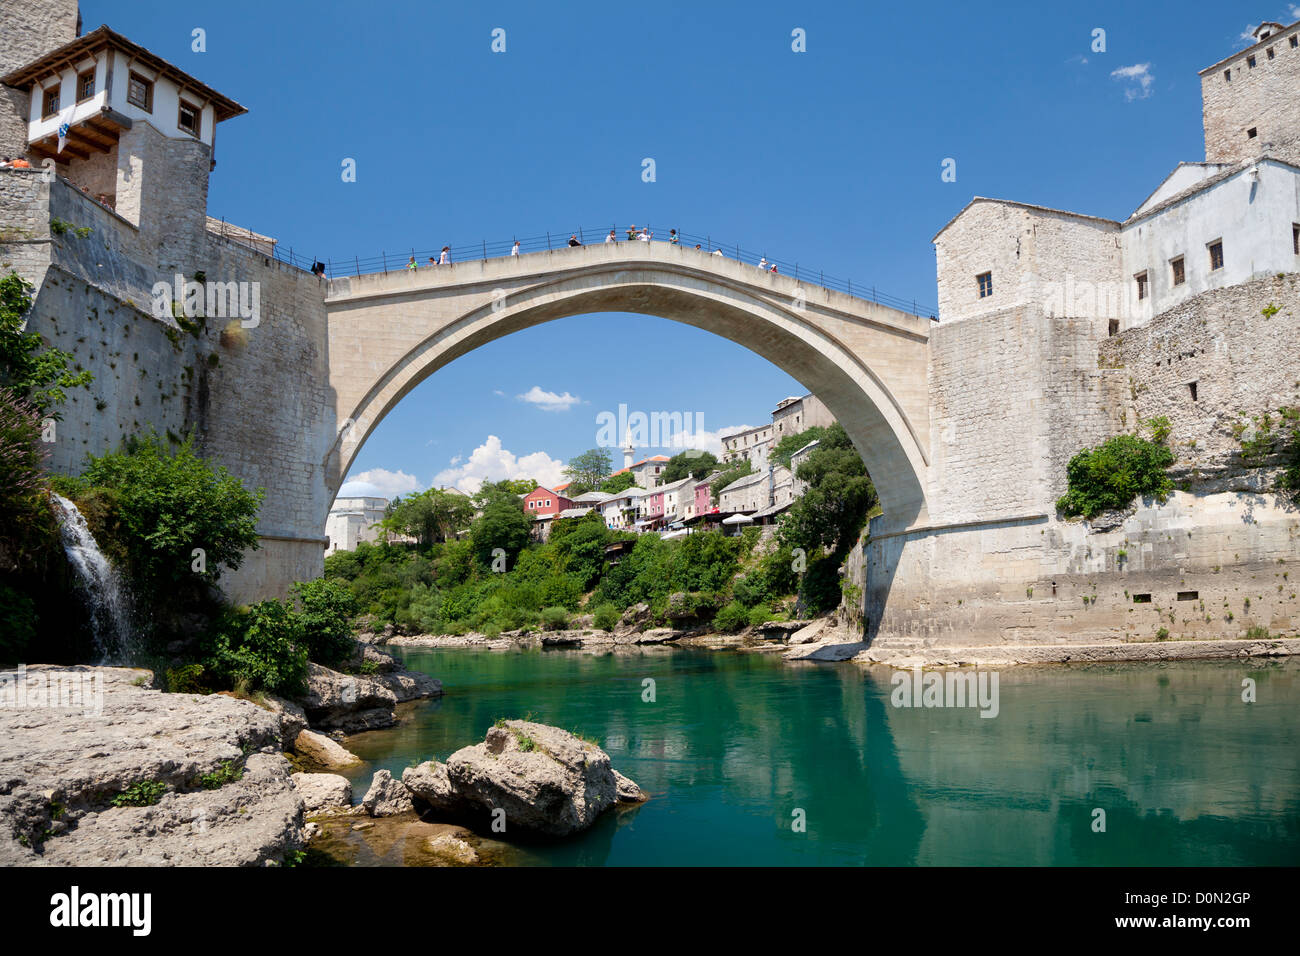 Stari Most Old Bridge In Mostar Bosnia And Herzegovina Stock Photo Alamy